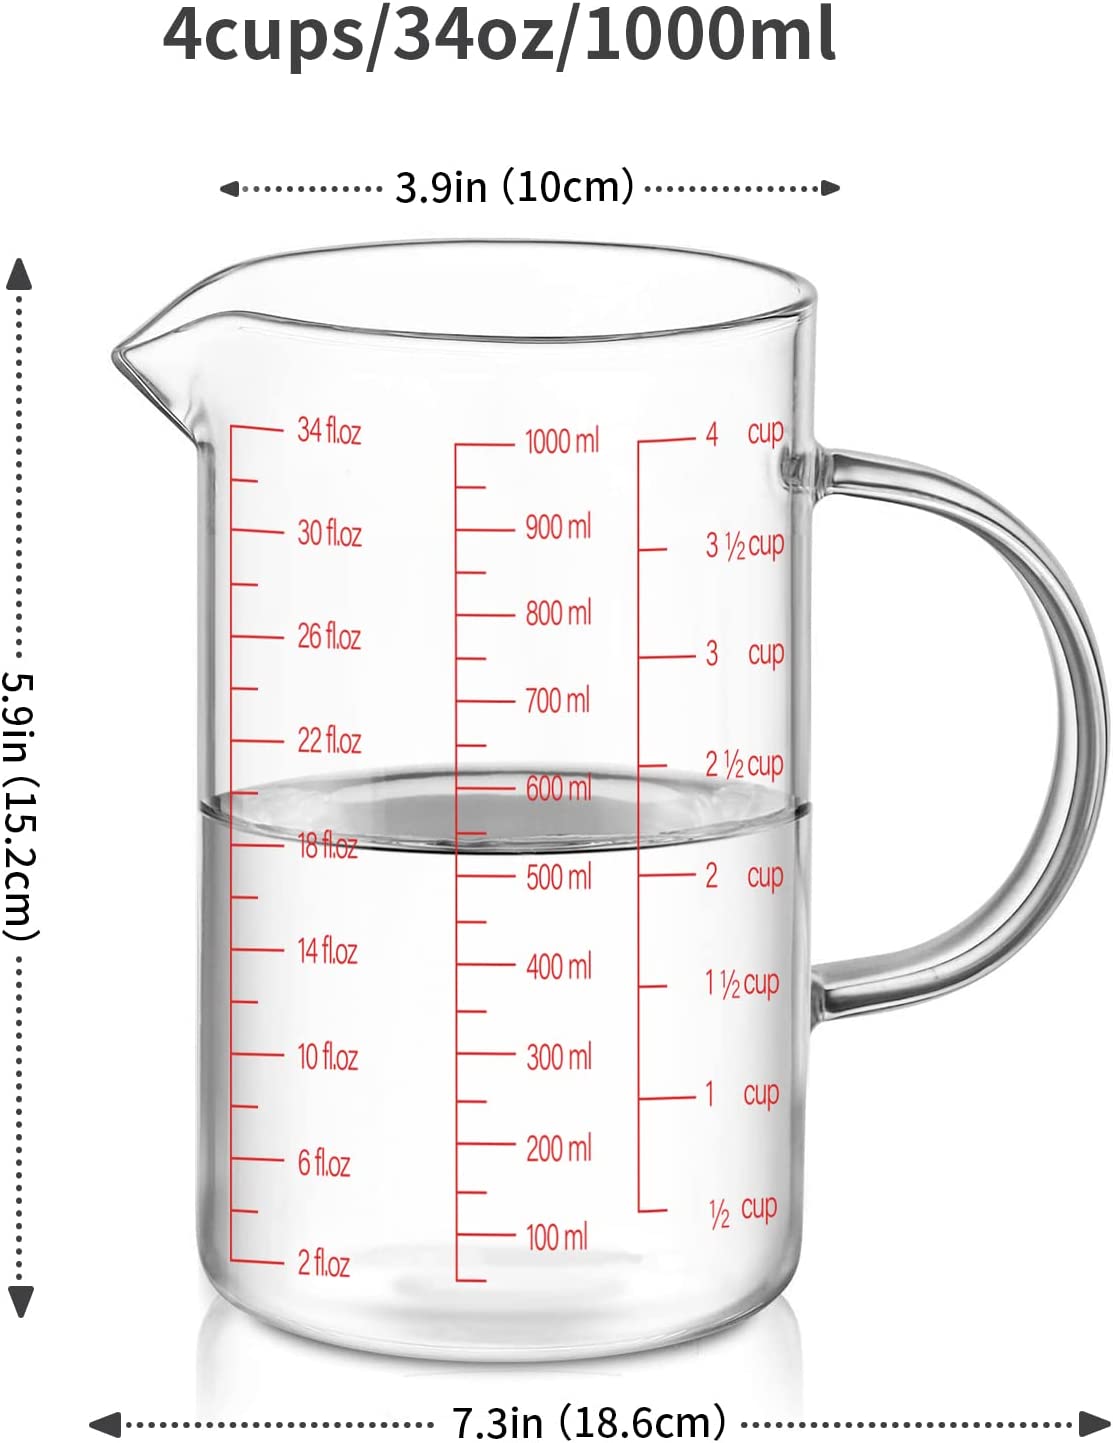 Measuring Cup Use, Easy Read Measuring Cups